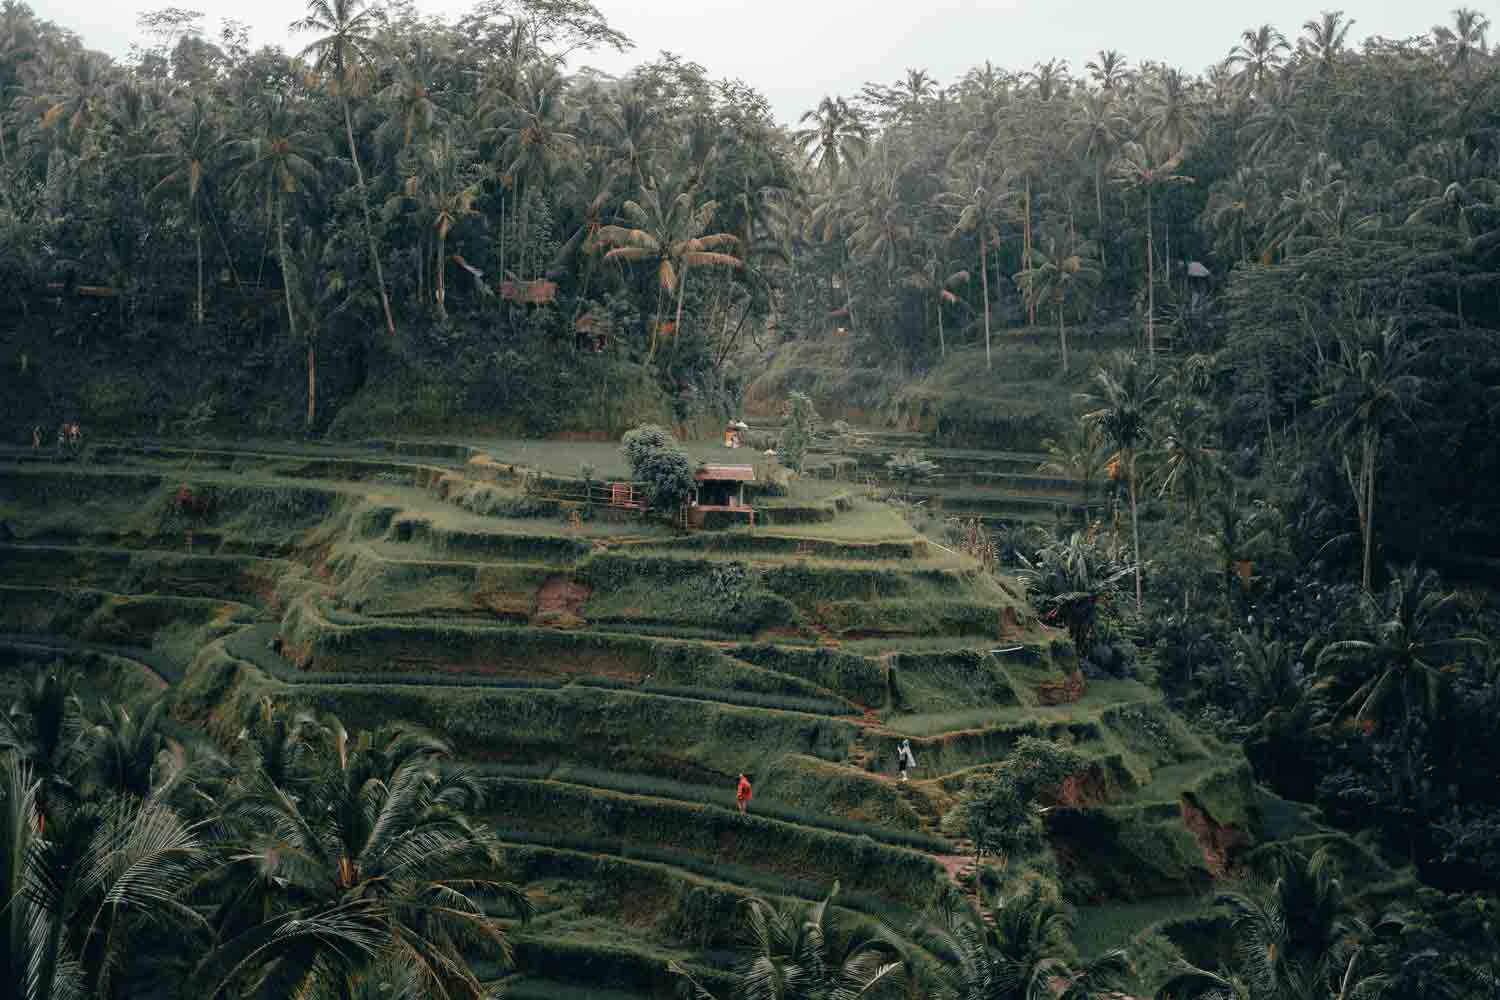 tegalalang | bali's rice terraces